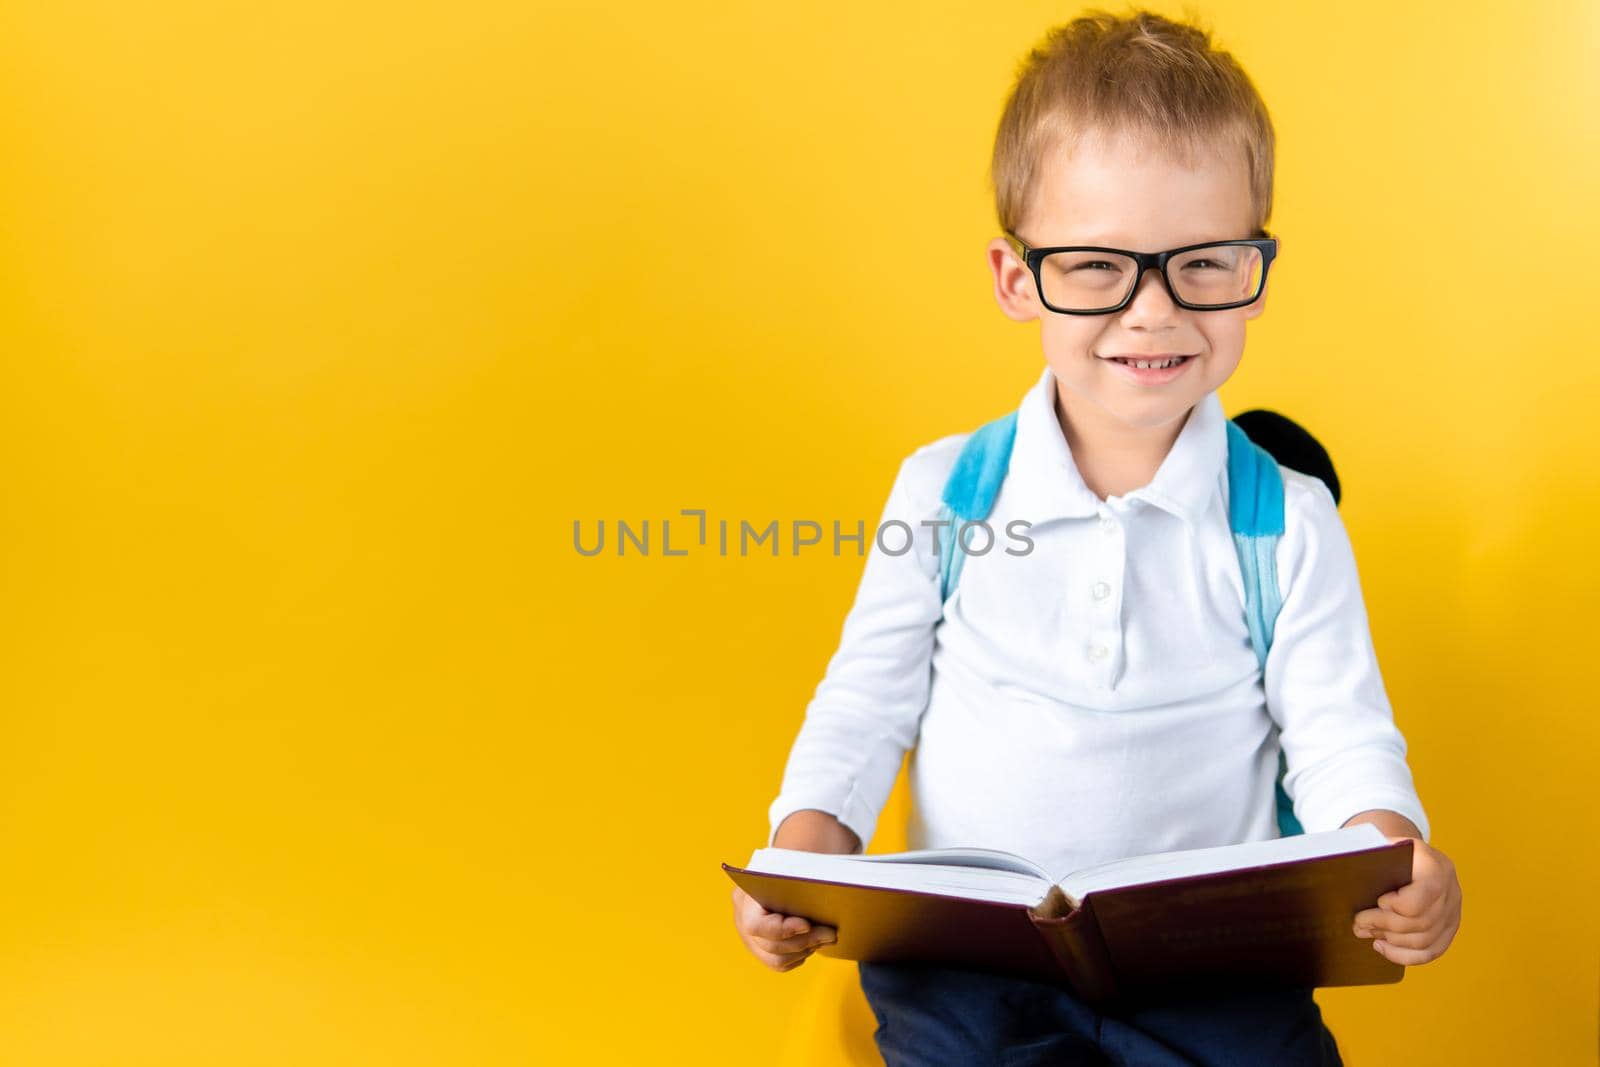 Banner Funny Preschool Child Boy in Big Glasses Reads Book on Yellow Background Copy Space. Happy Smiling Kid Go Back to School, Kindergarten. Success, Motivation, Winner, Genius, Superhero concept.